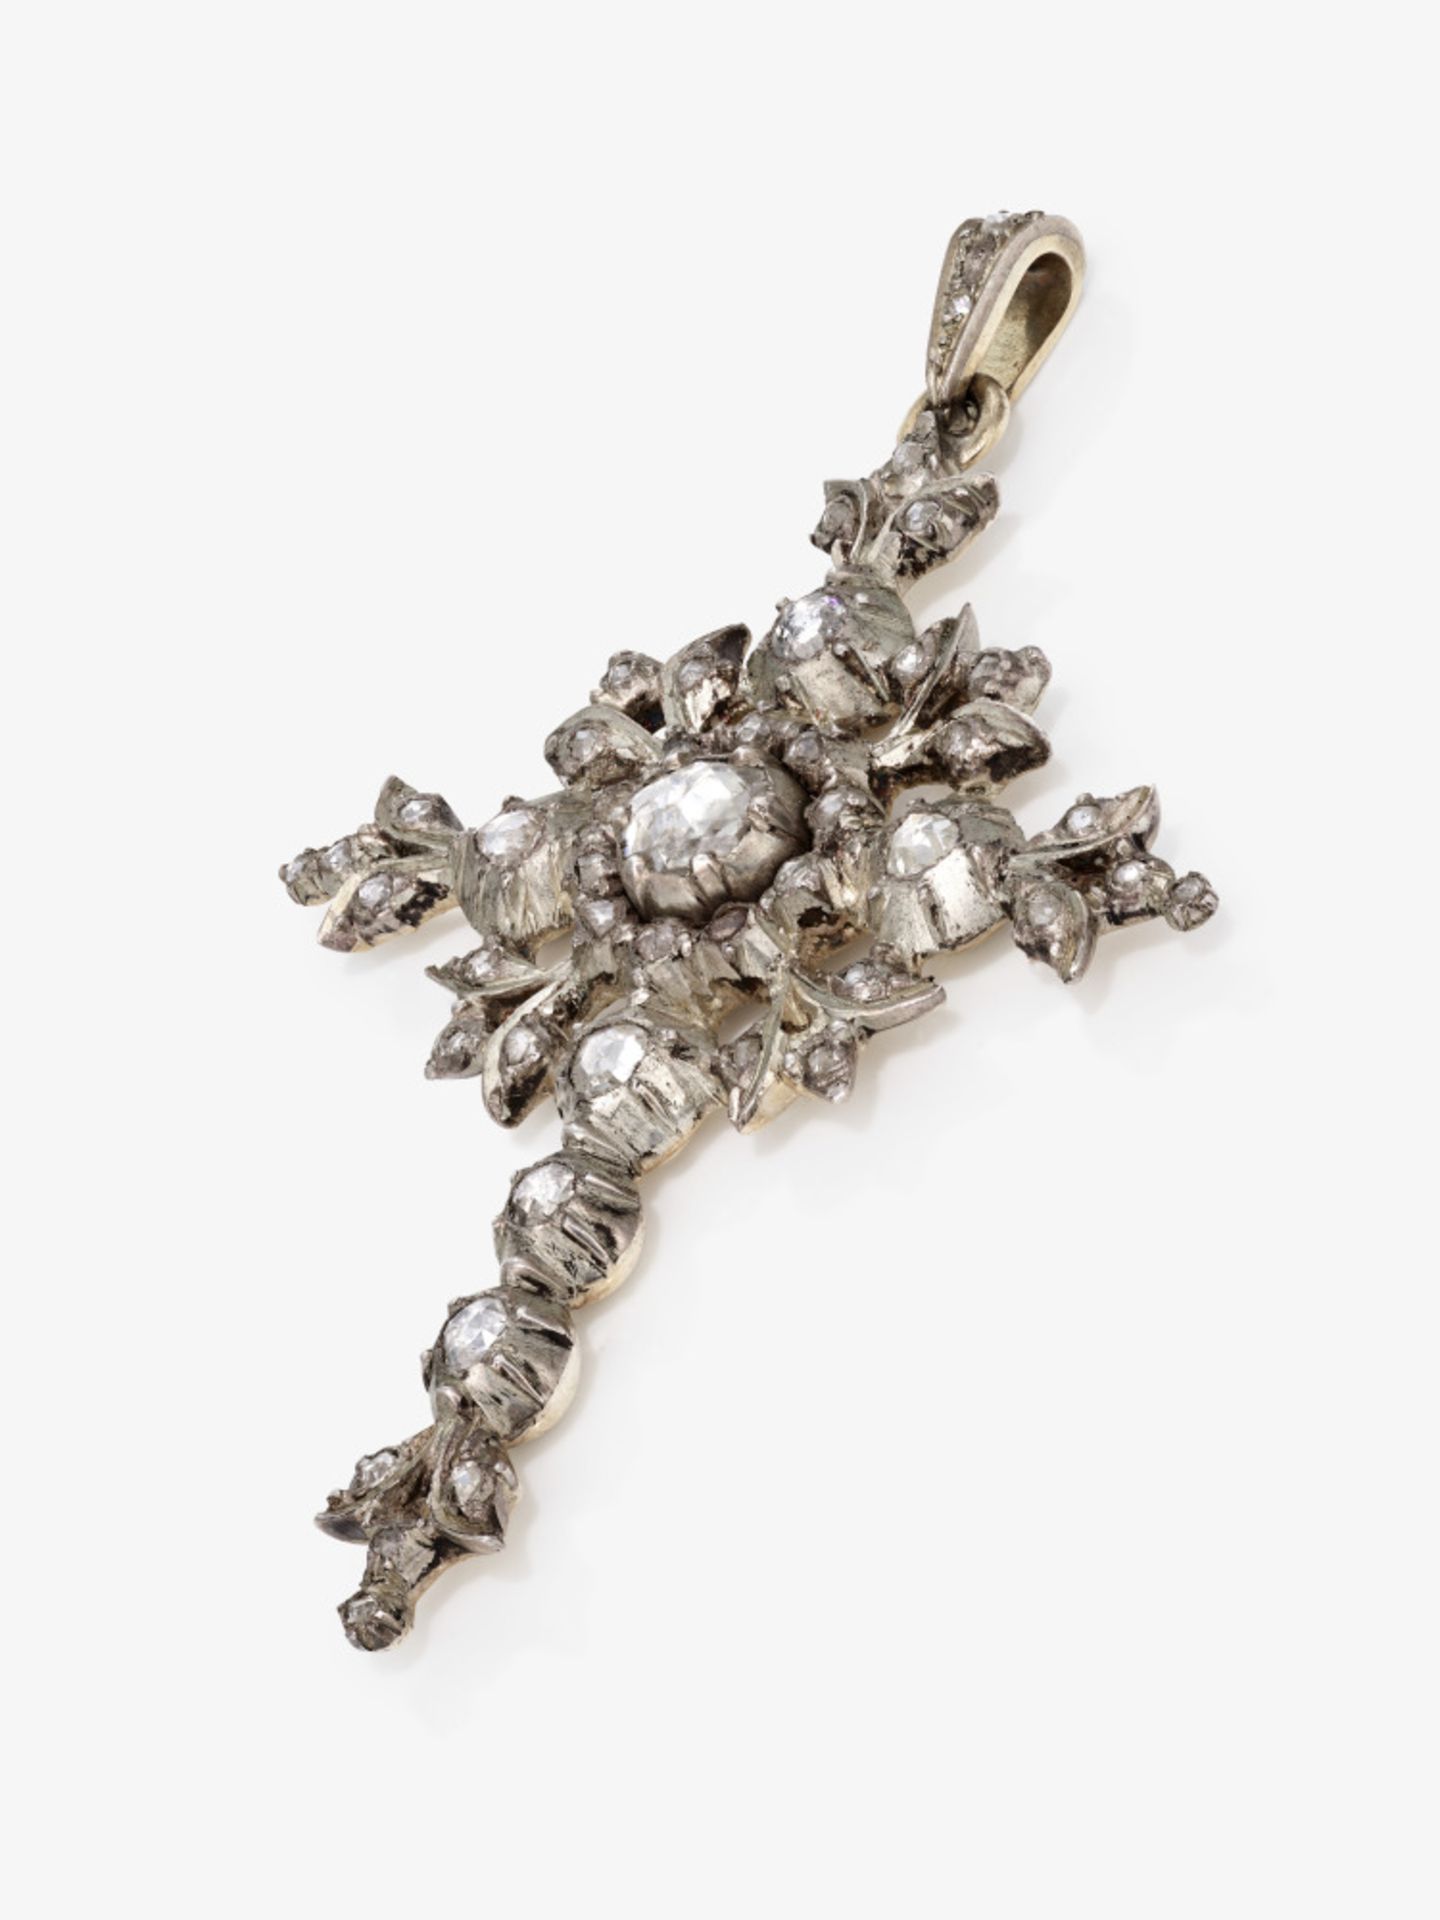 A rare cross pendant with diamonds - France, circa 1740-1750 - Image 2 of 2